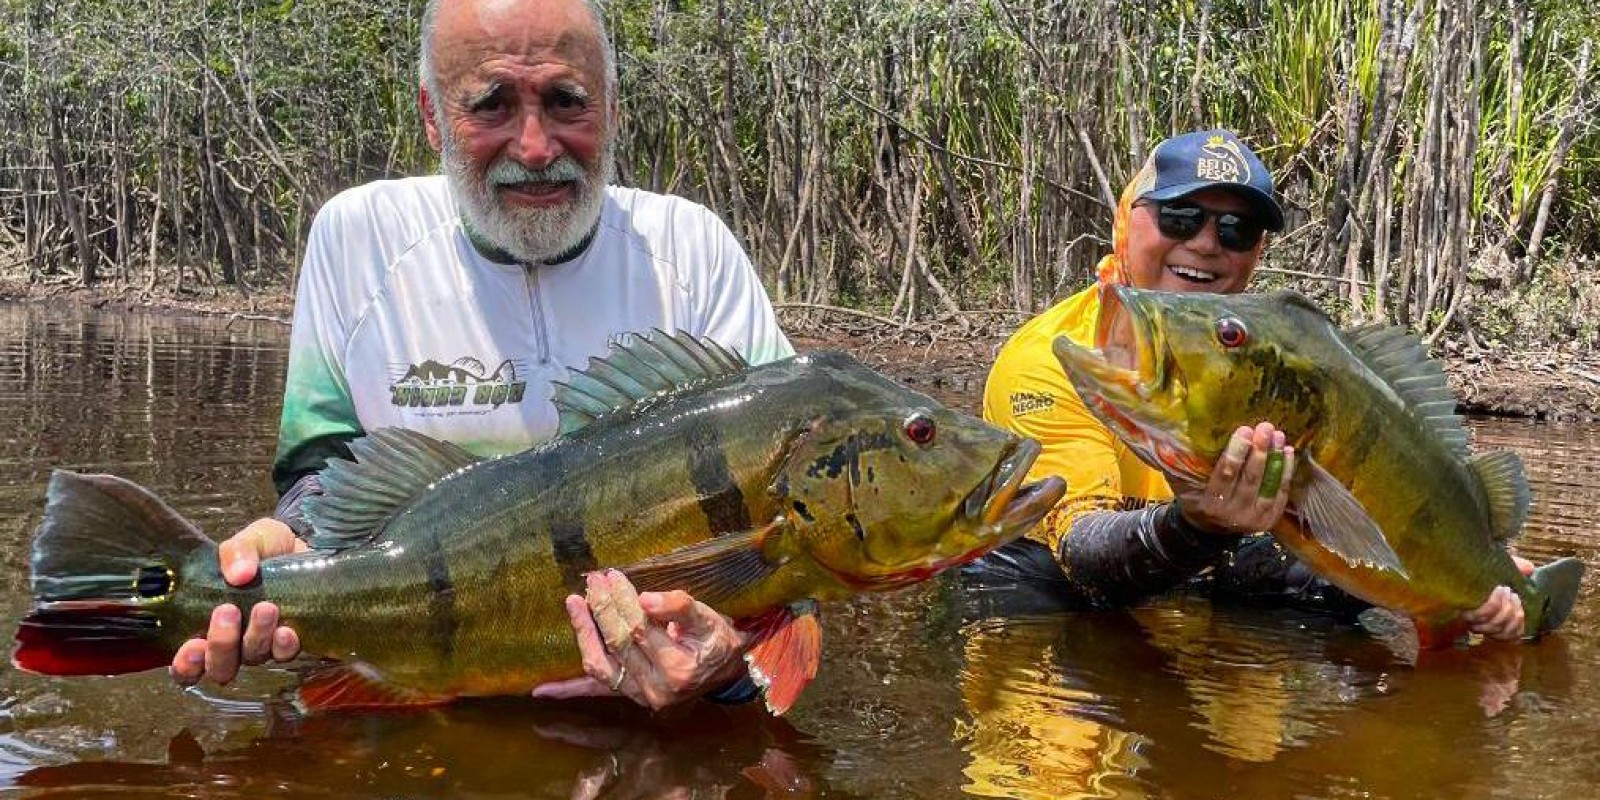 Barco Amazon Sport Fishing - capacidade 14 pessos - Foto 19 de 24